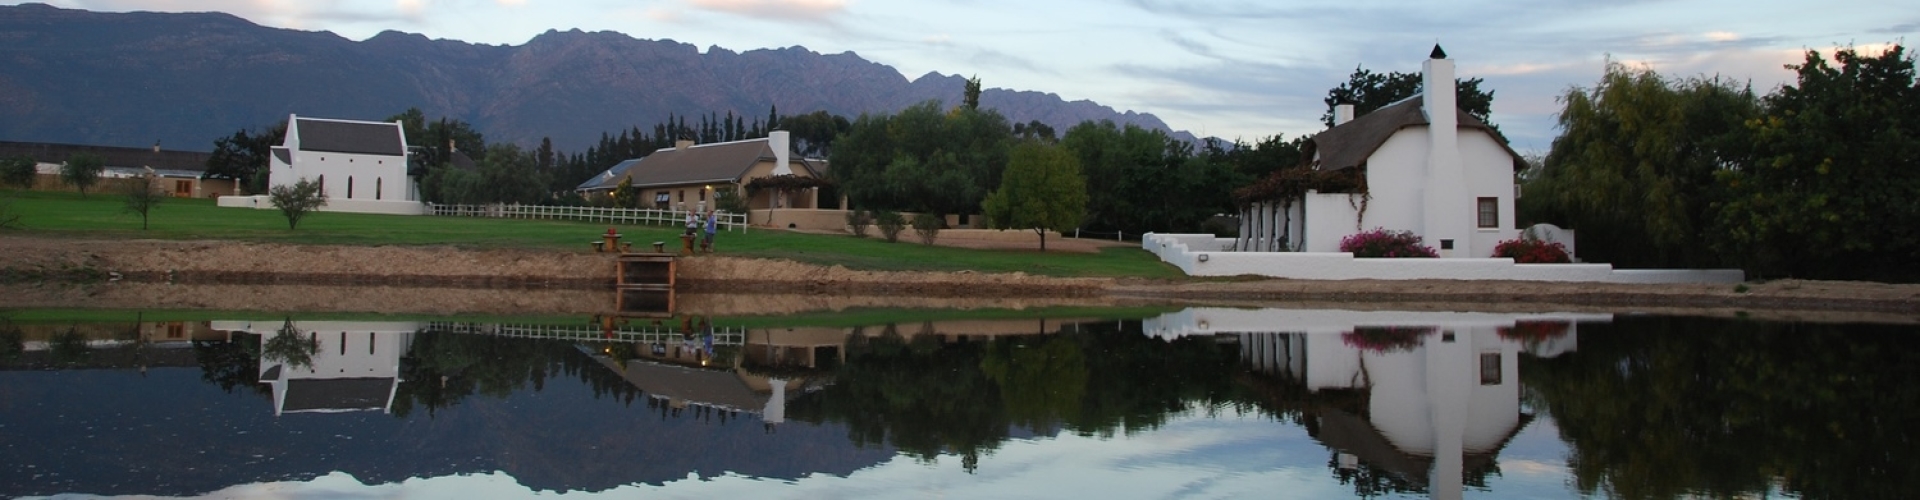 Manley Wine Lodge Tulbagh Zuid-afrika Header